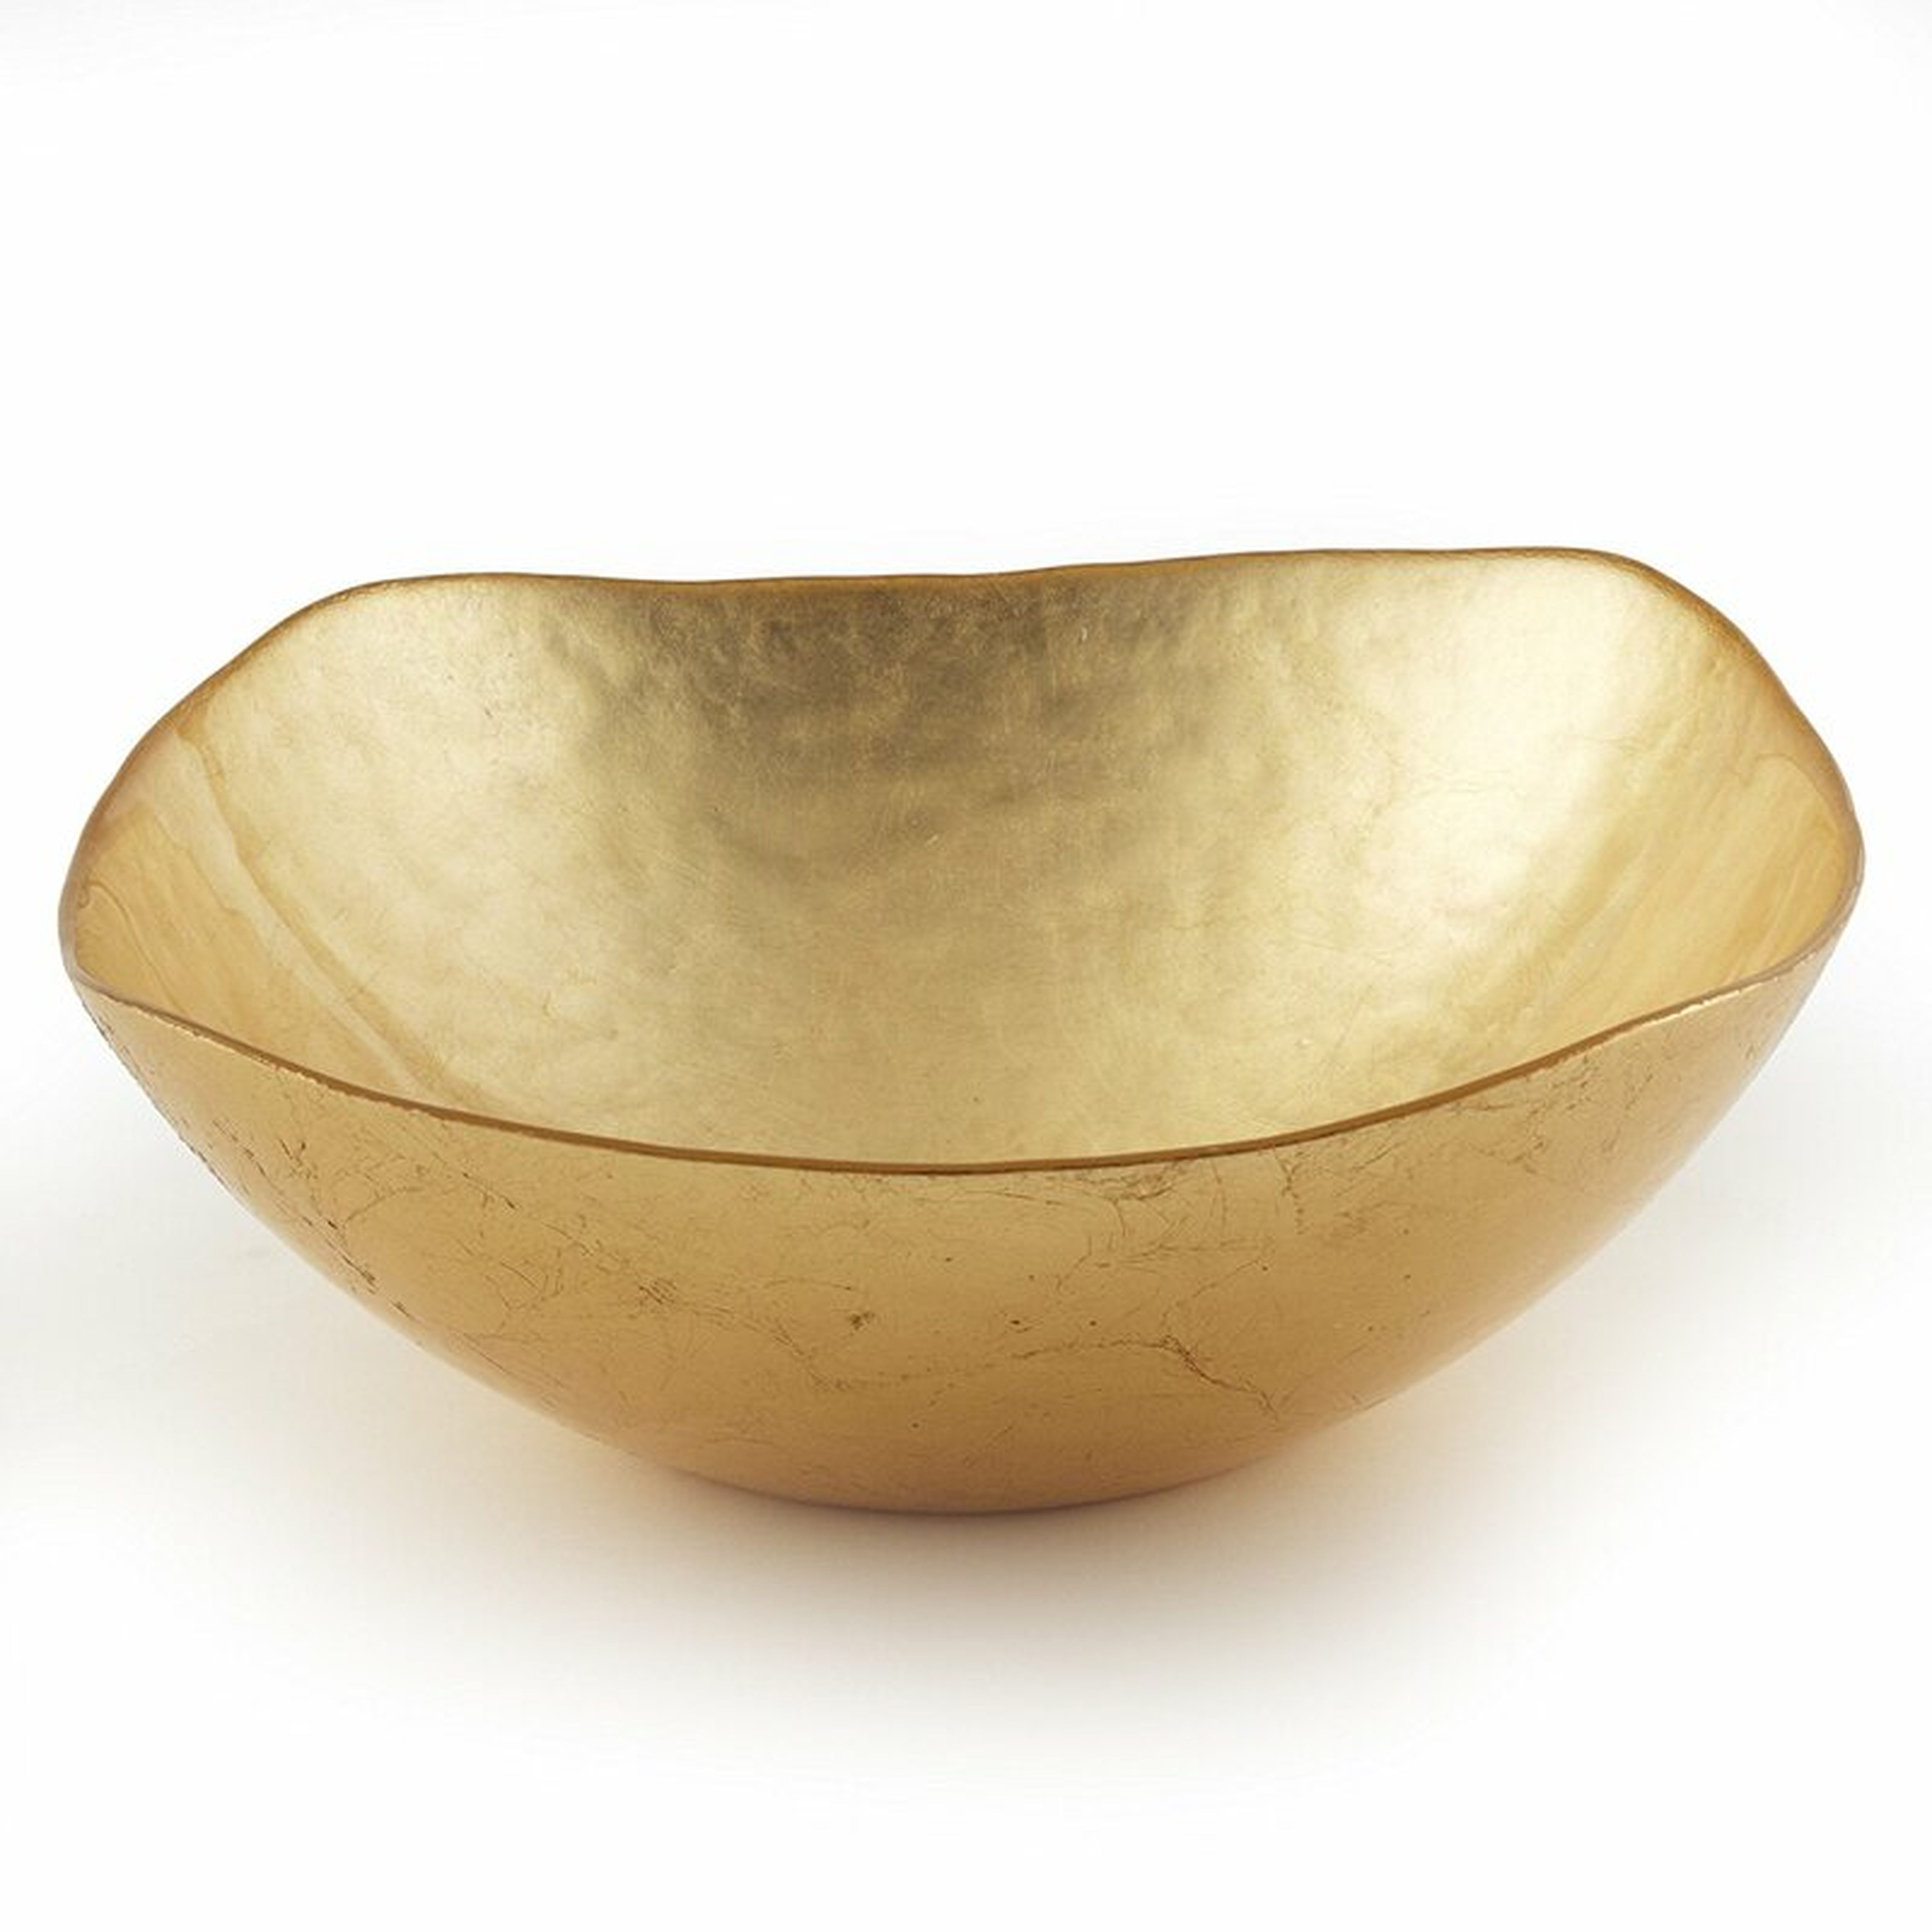 Billie-Lee Glass Square Decorative Bowl in Gold - Wayfair